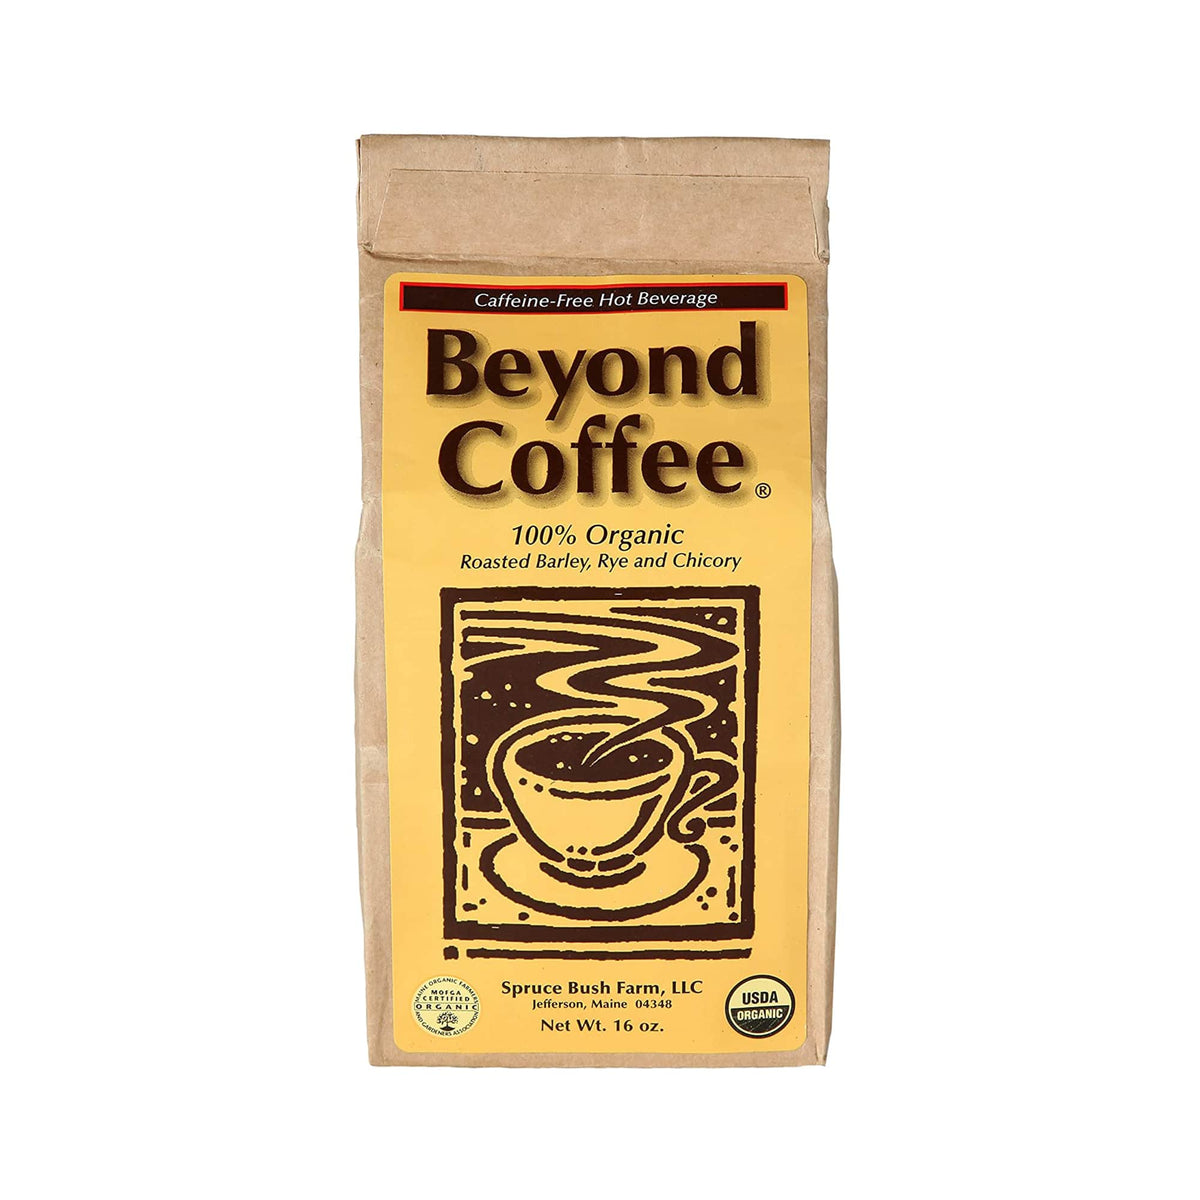 Beyond Coffee - Organic Caffeine Free Coffee Alternative - Only Tasty Goods Inc.